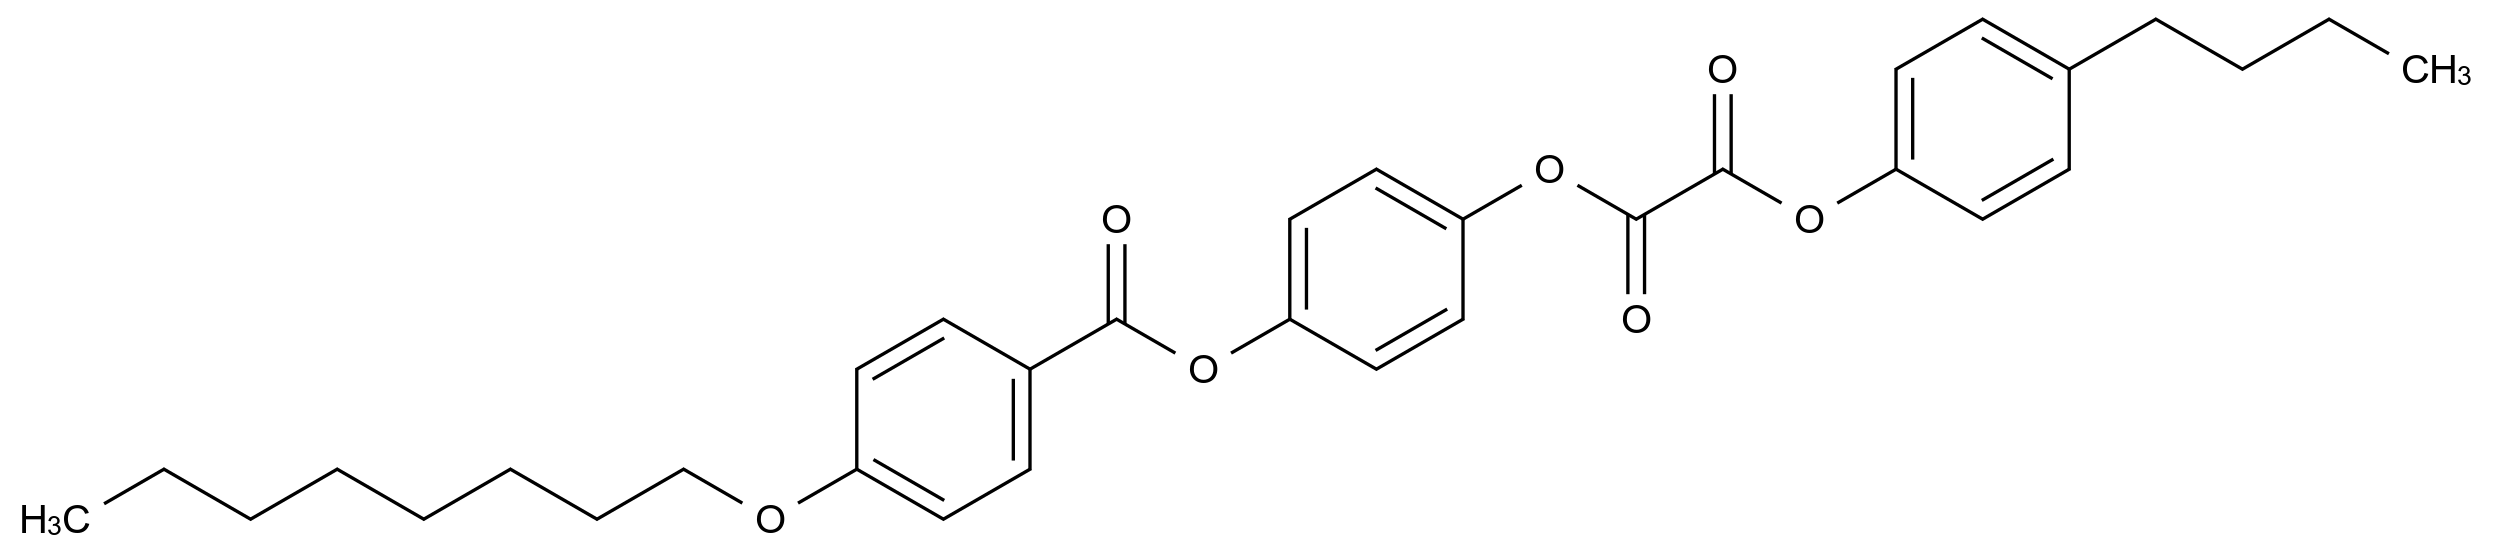 1-O-(4-butylphenyl) 2-O-[4-(4-octoxybenzoyl)oxyphenyl] oxalate_108802-36-4